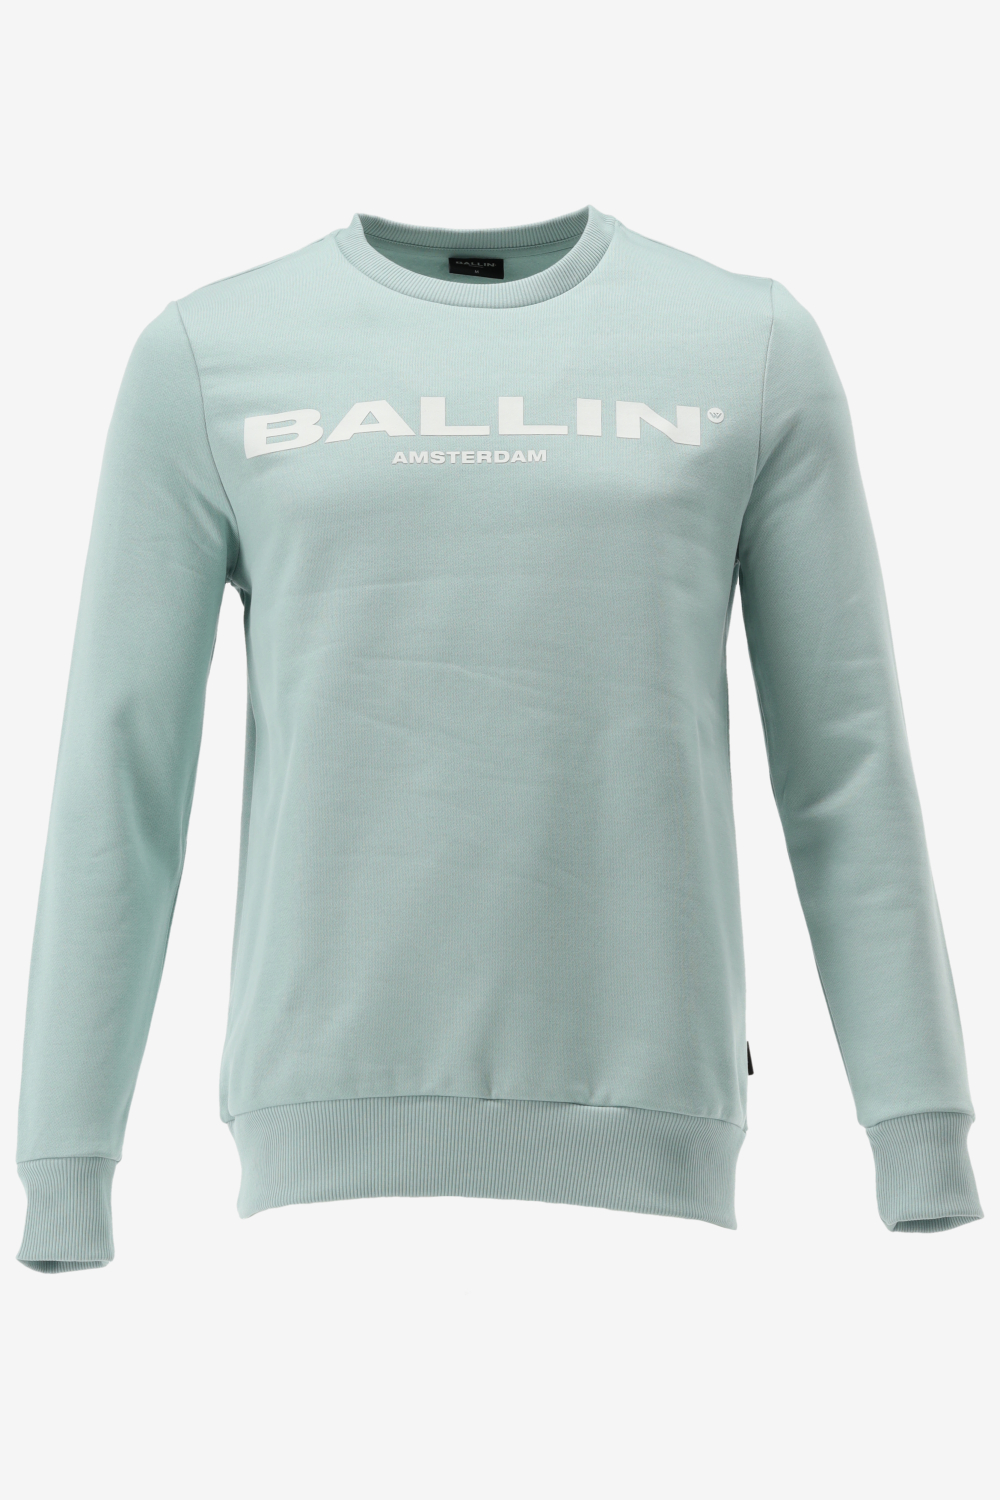 Ballin Amsterdam -  Heren Slim Fit  Original Sweater  - Groen - Maat XL